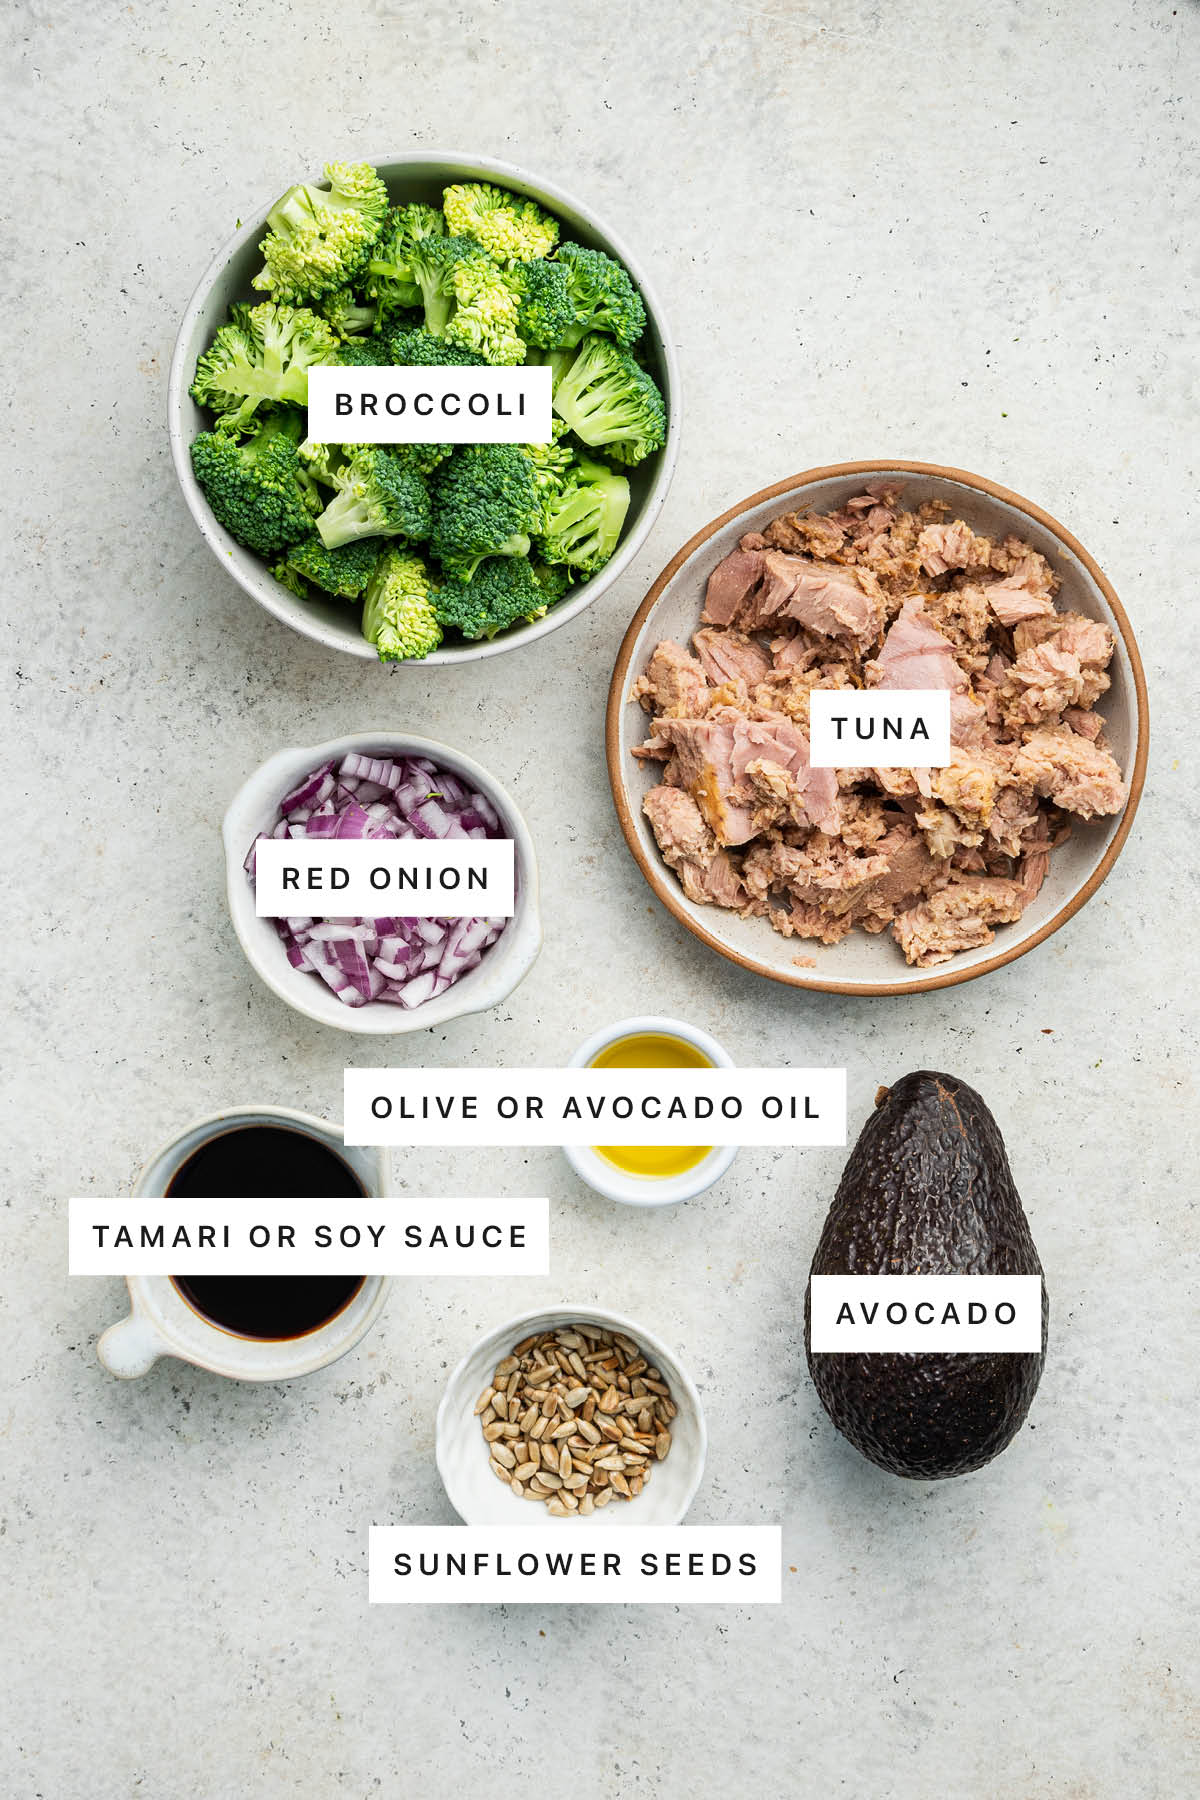 Ingredients measured out to make a Broccoli Avocado Tuna Bowl: broccoli, tuna, red onion, olive oil, tamari, sunflower seeds and avocado.